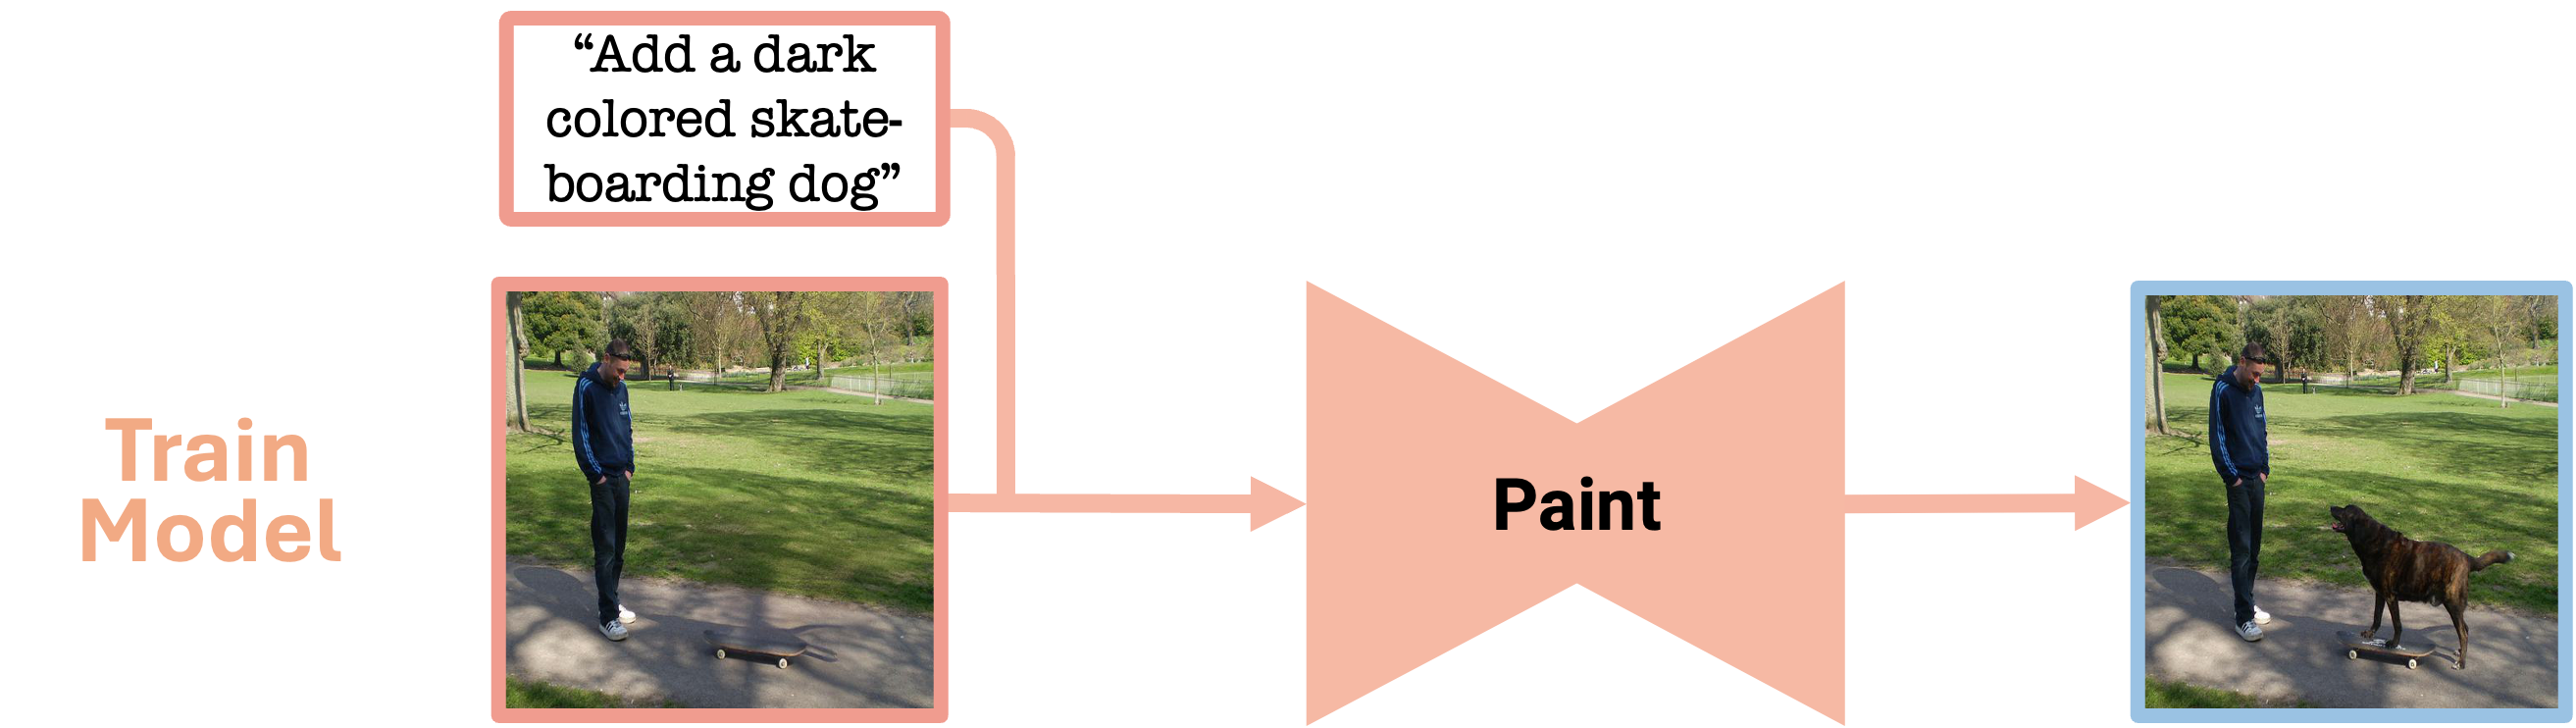 Method Image 2